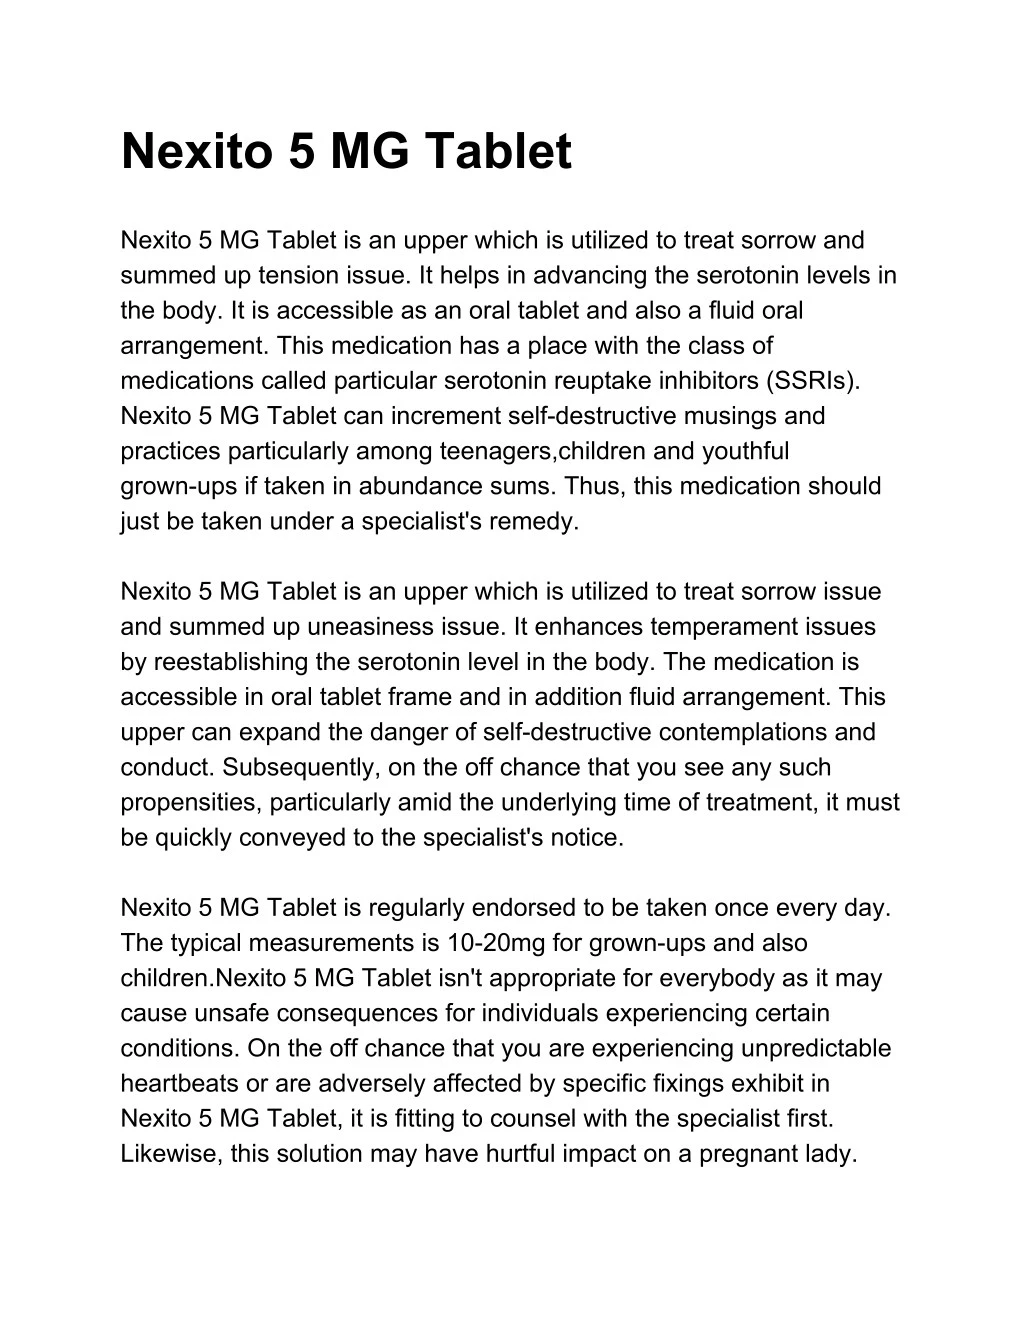 nexito 5 mg tablet nexito 5 mg tablet is an upper